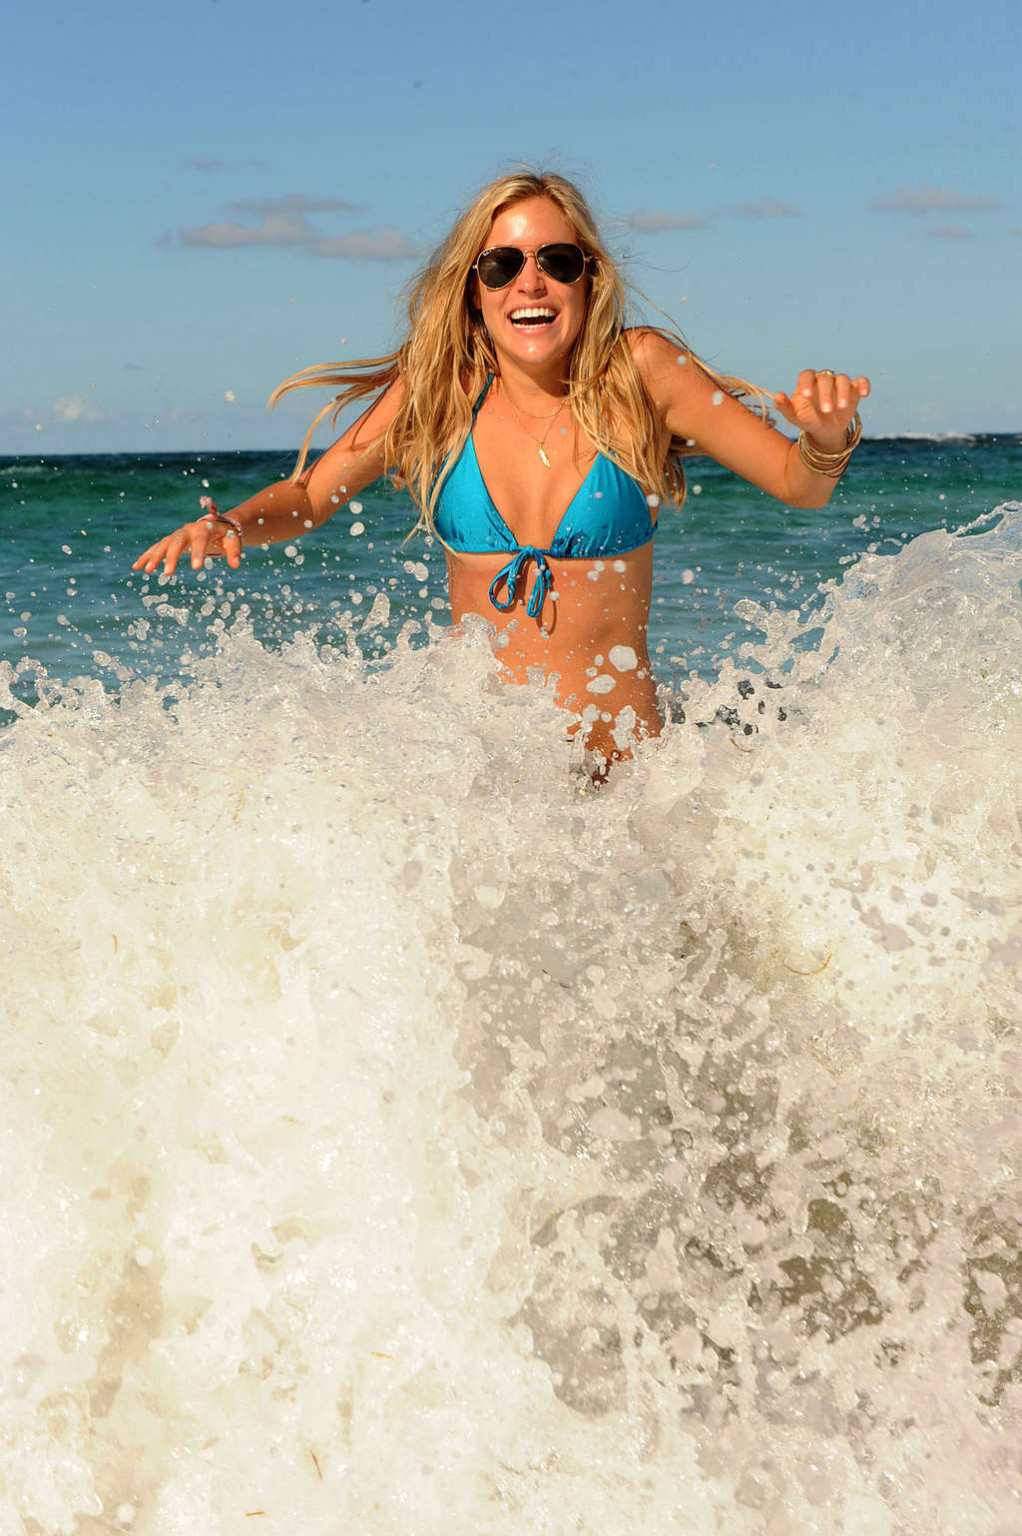 Kristin cavallari s'amusant sur la plage et montrant son corps sexy et chaud en bikini
 #75375029